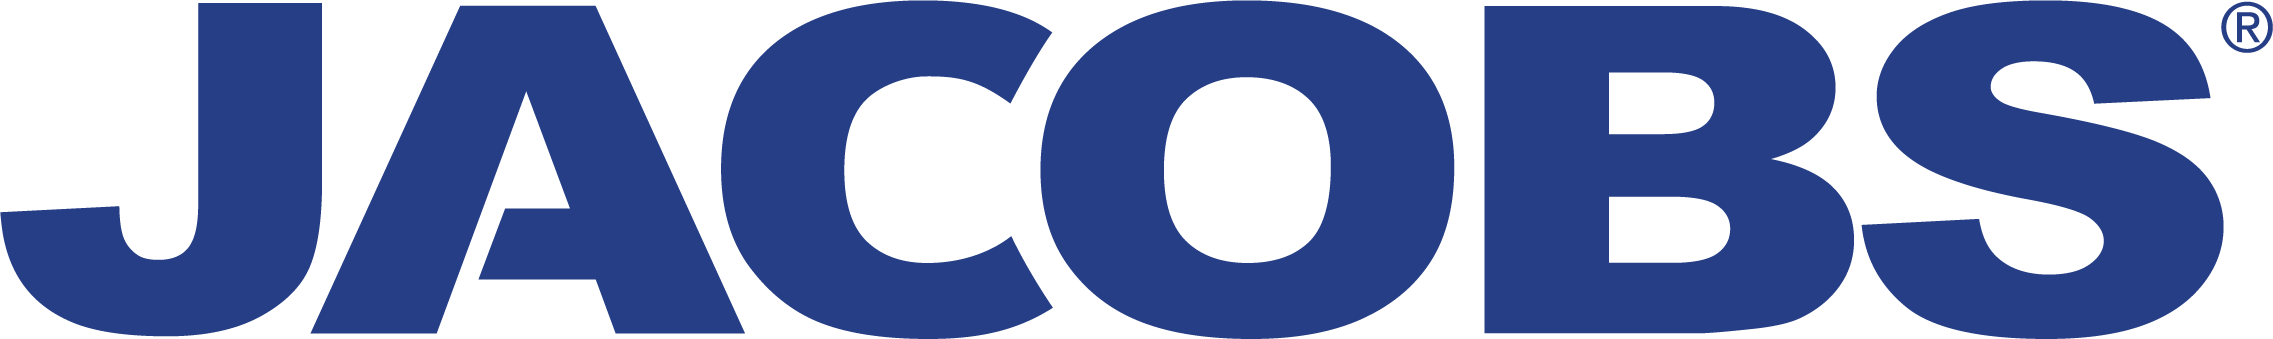 Jacobs Logo - Jacobs logo - Social Mobility Foundation